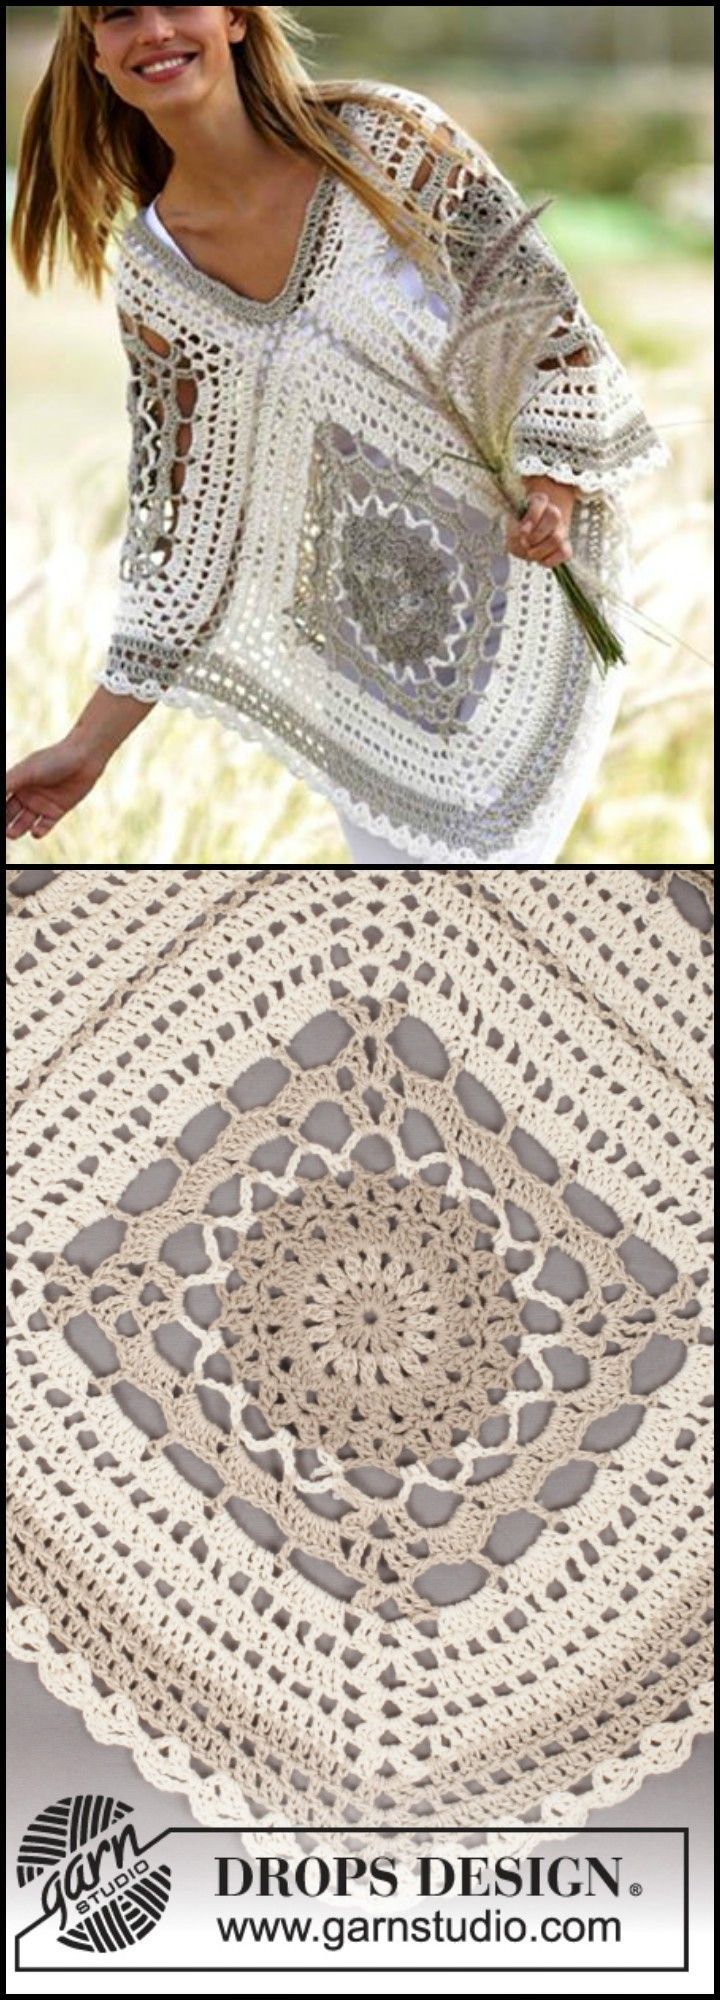 1576415682_313_50-Free-Crochet-Poncho-Patterns-for-All.jpg